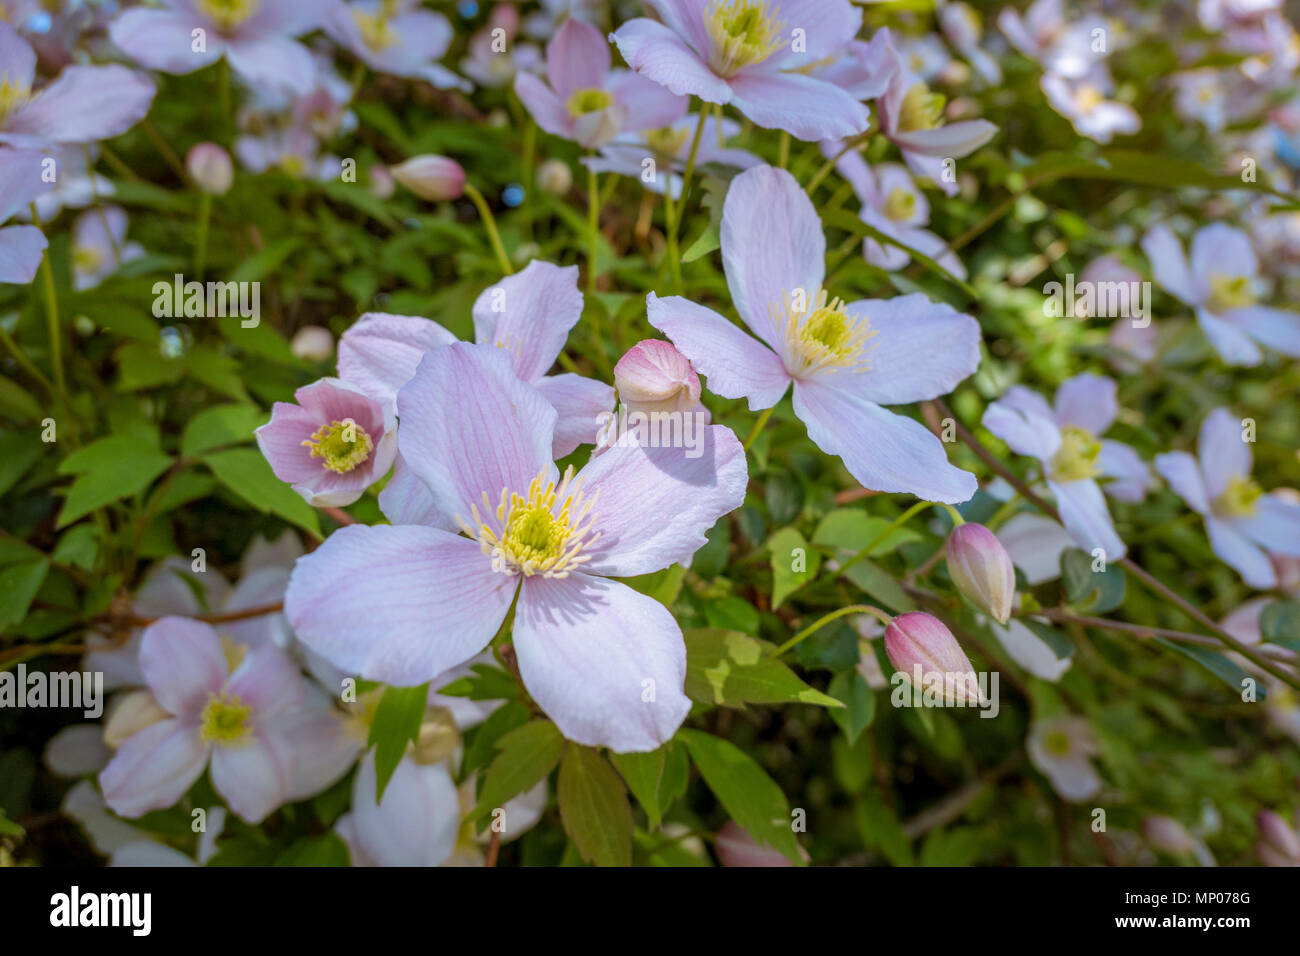 Flowering Anemone Clematis (Clematis montana cultivar Elisabeth), climbing plant. Bavaria, Germany, Europe Stock Photo